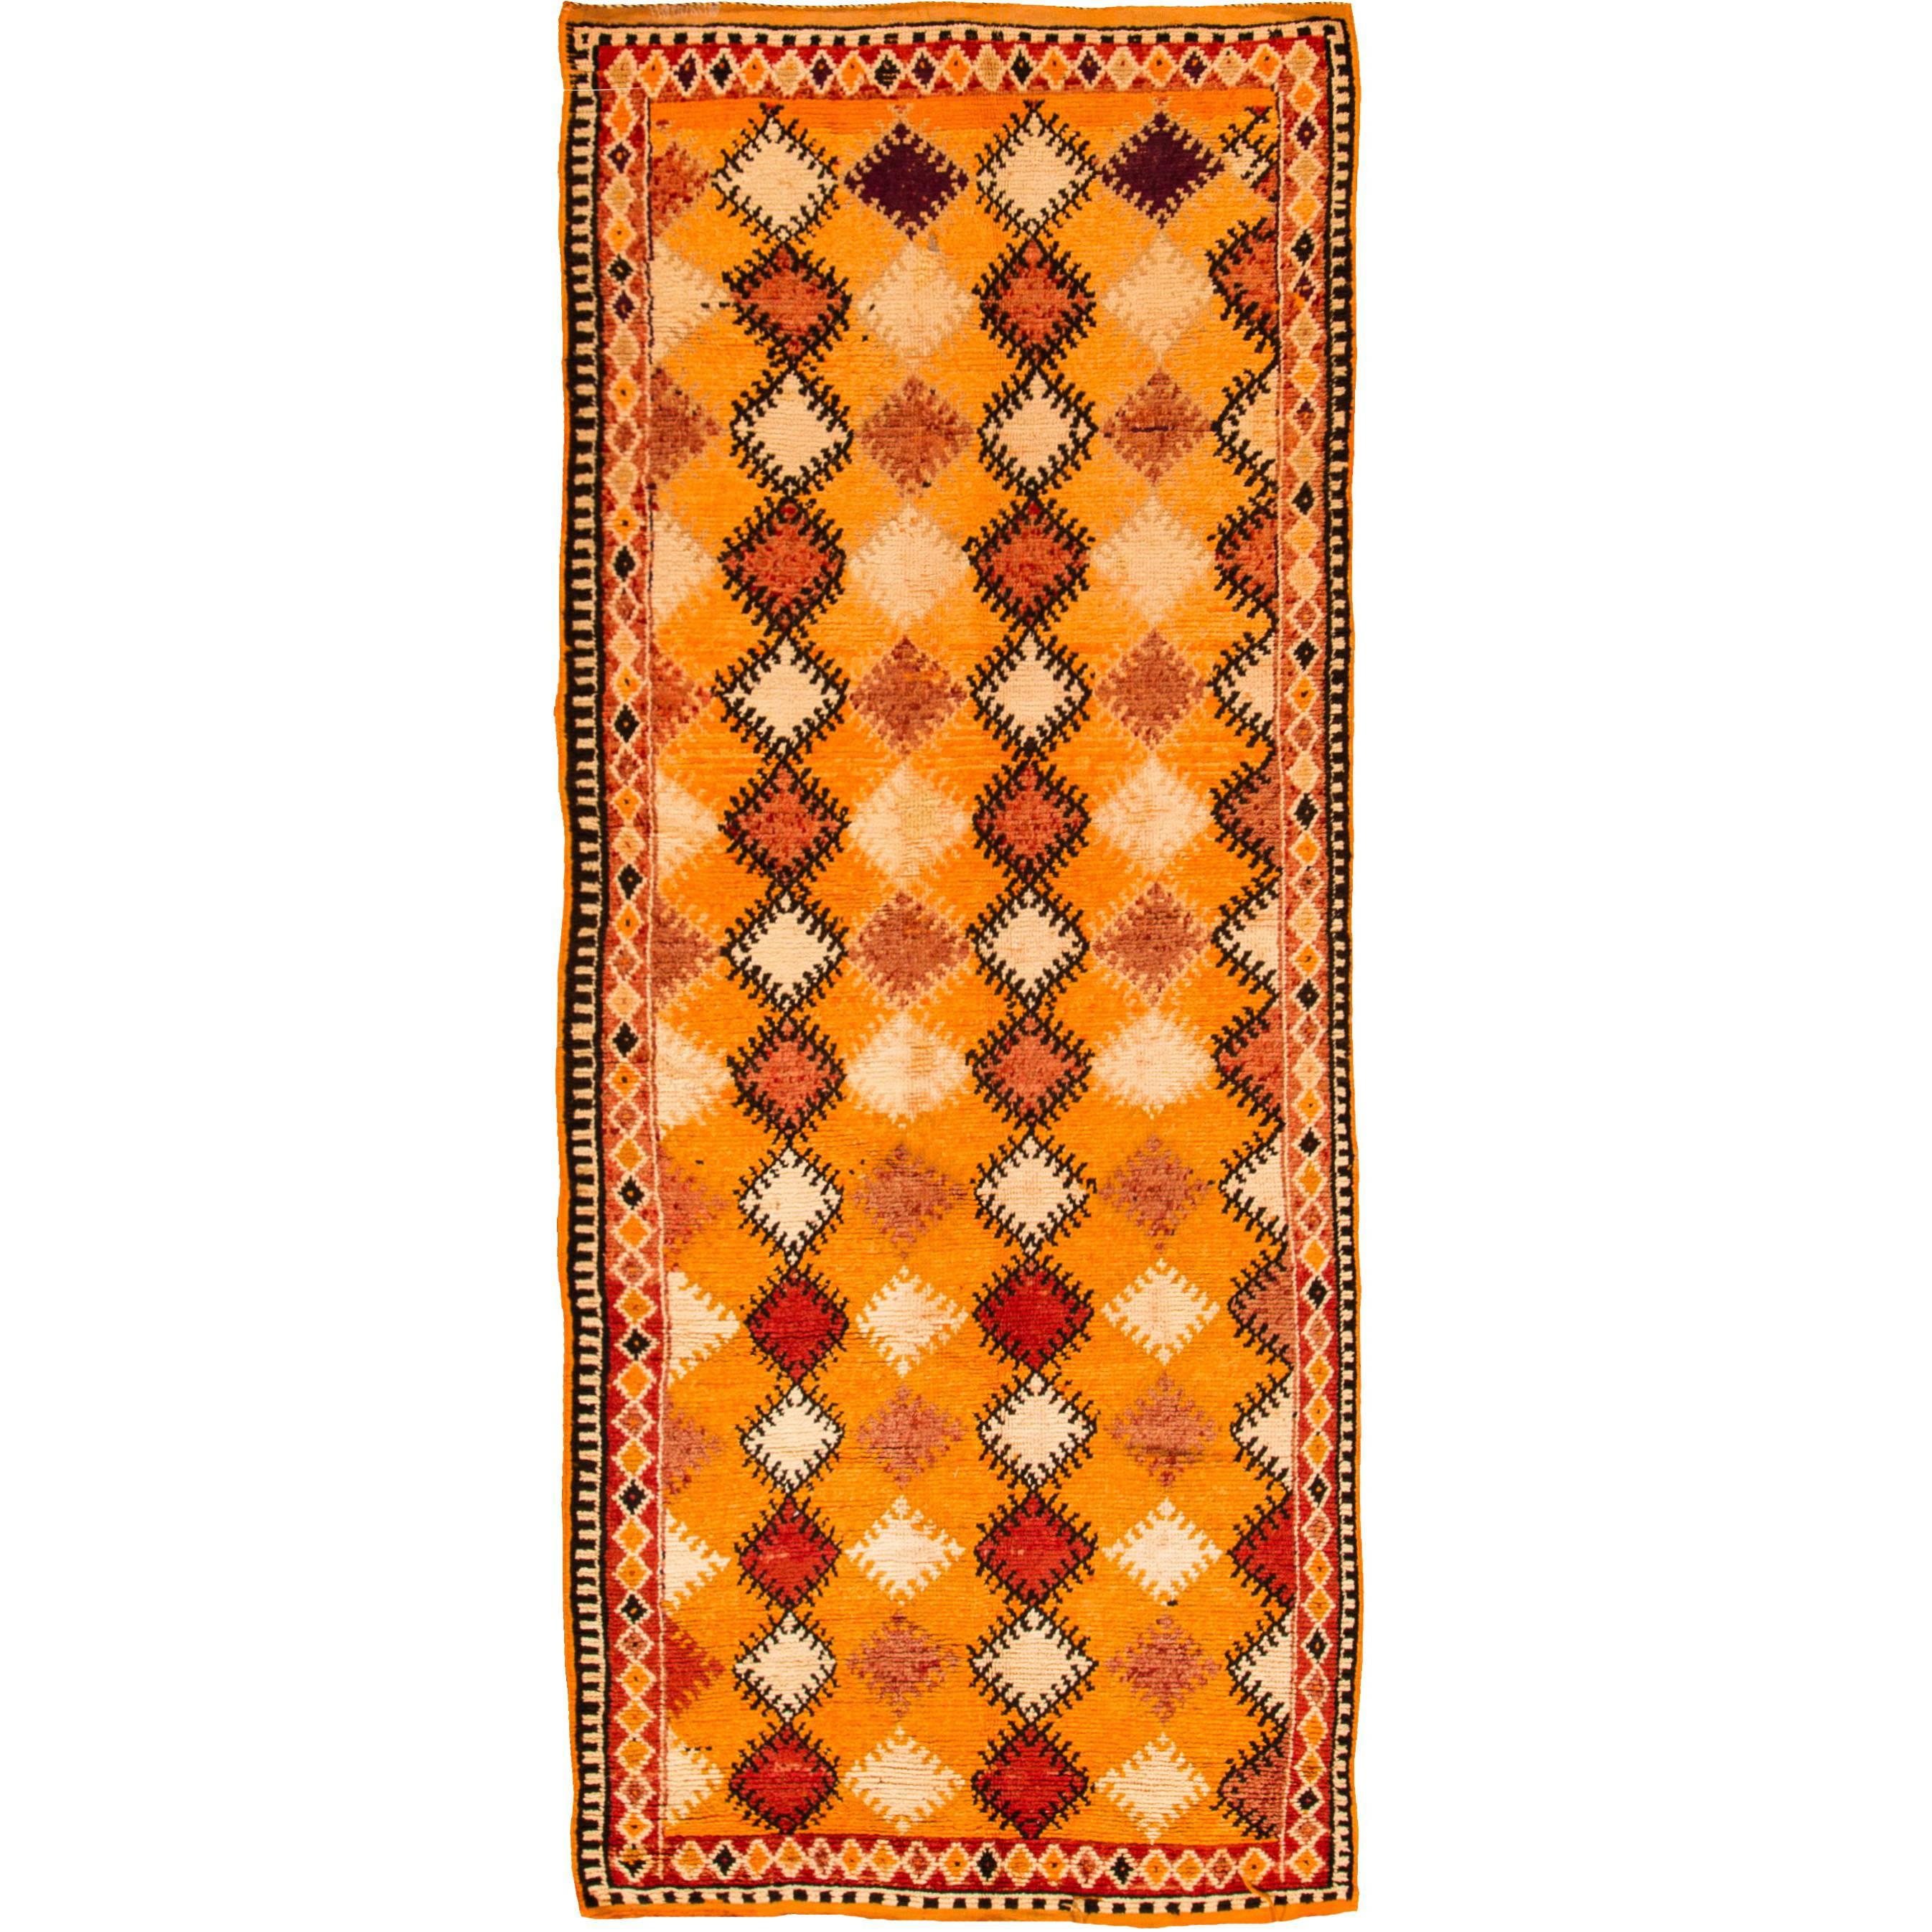 Mid-20th Century Vintage Geometric Moroccan Tribal Rug